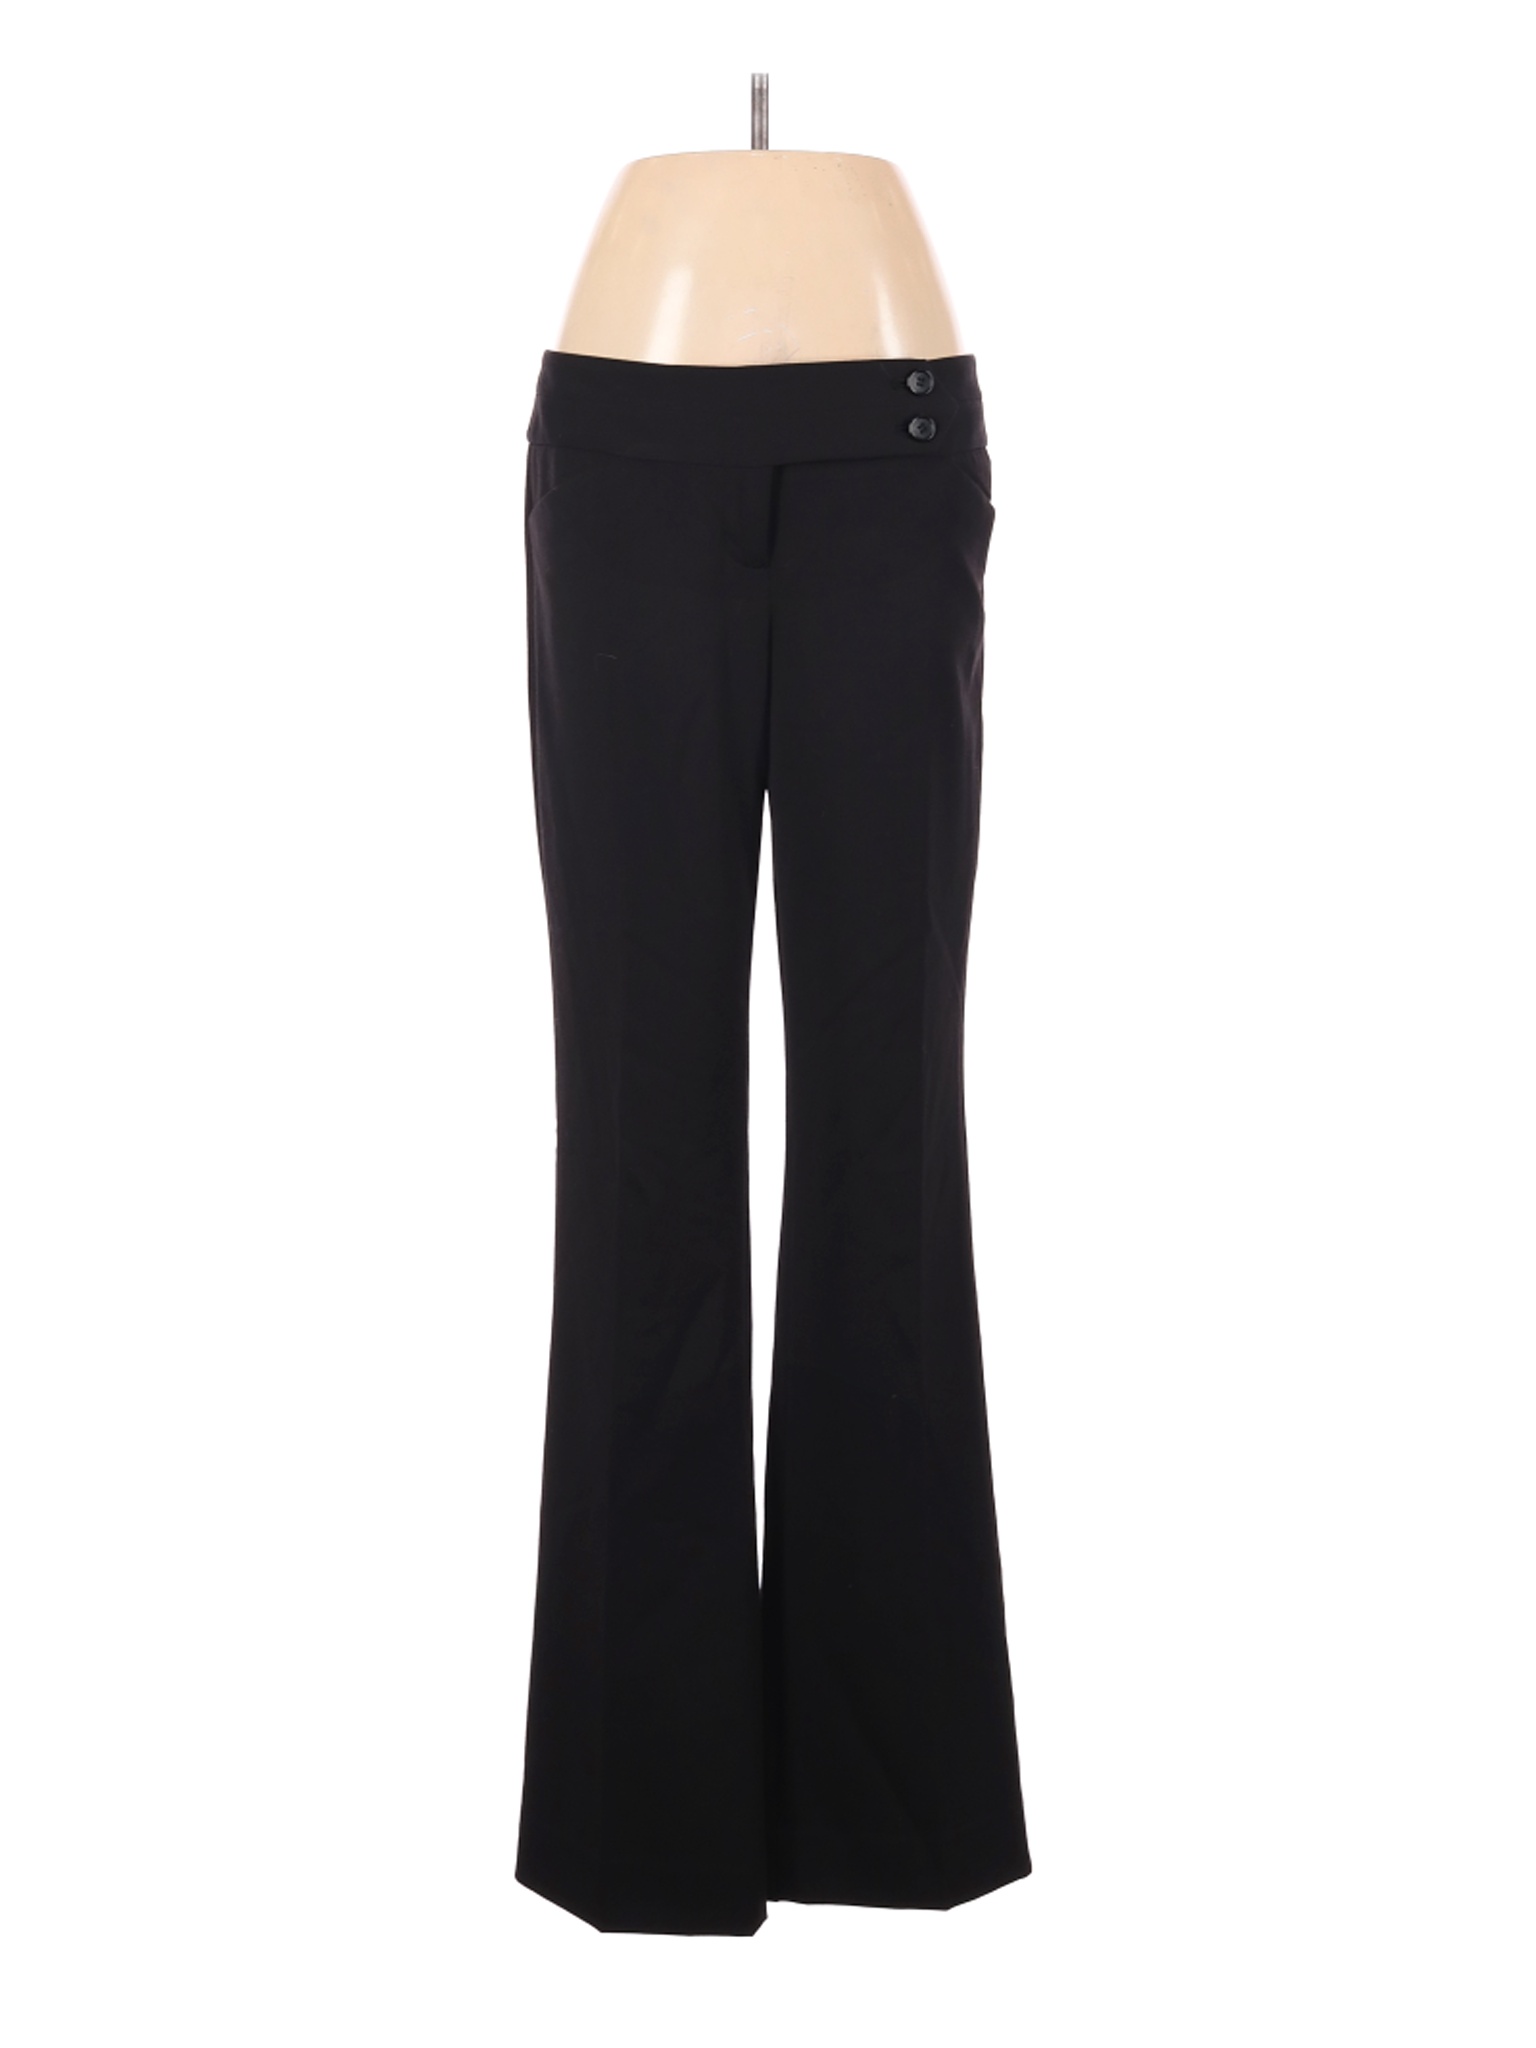 The Limited Women Black Dress Pants 6 | eBay